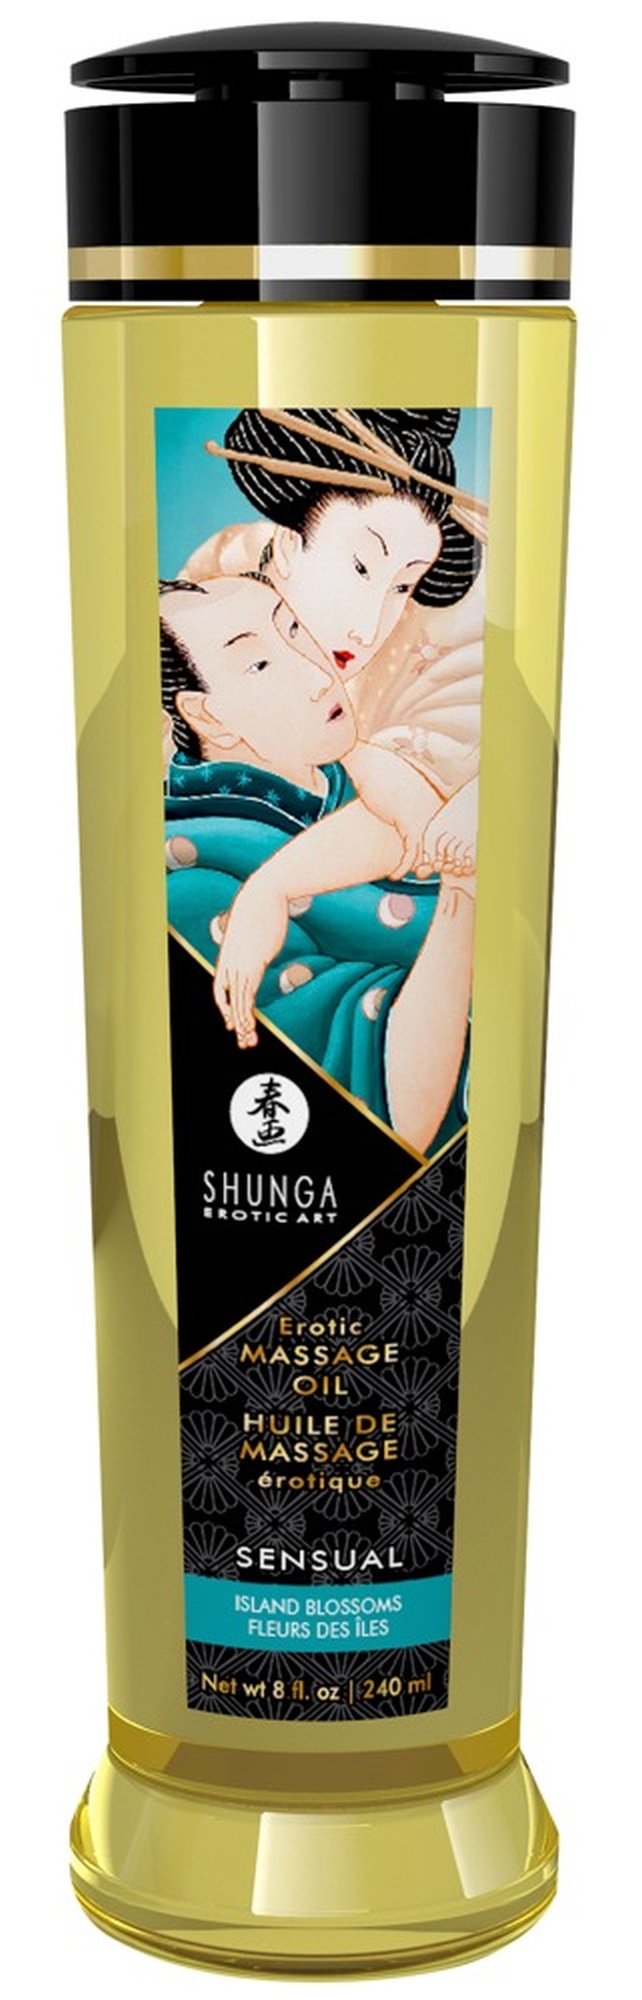 Shunga Massage Oil Sensual ISLAND BLOSSOMS zrobi nastrój w sypialni